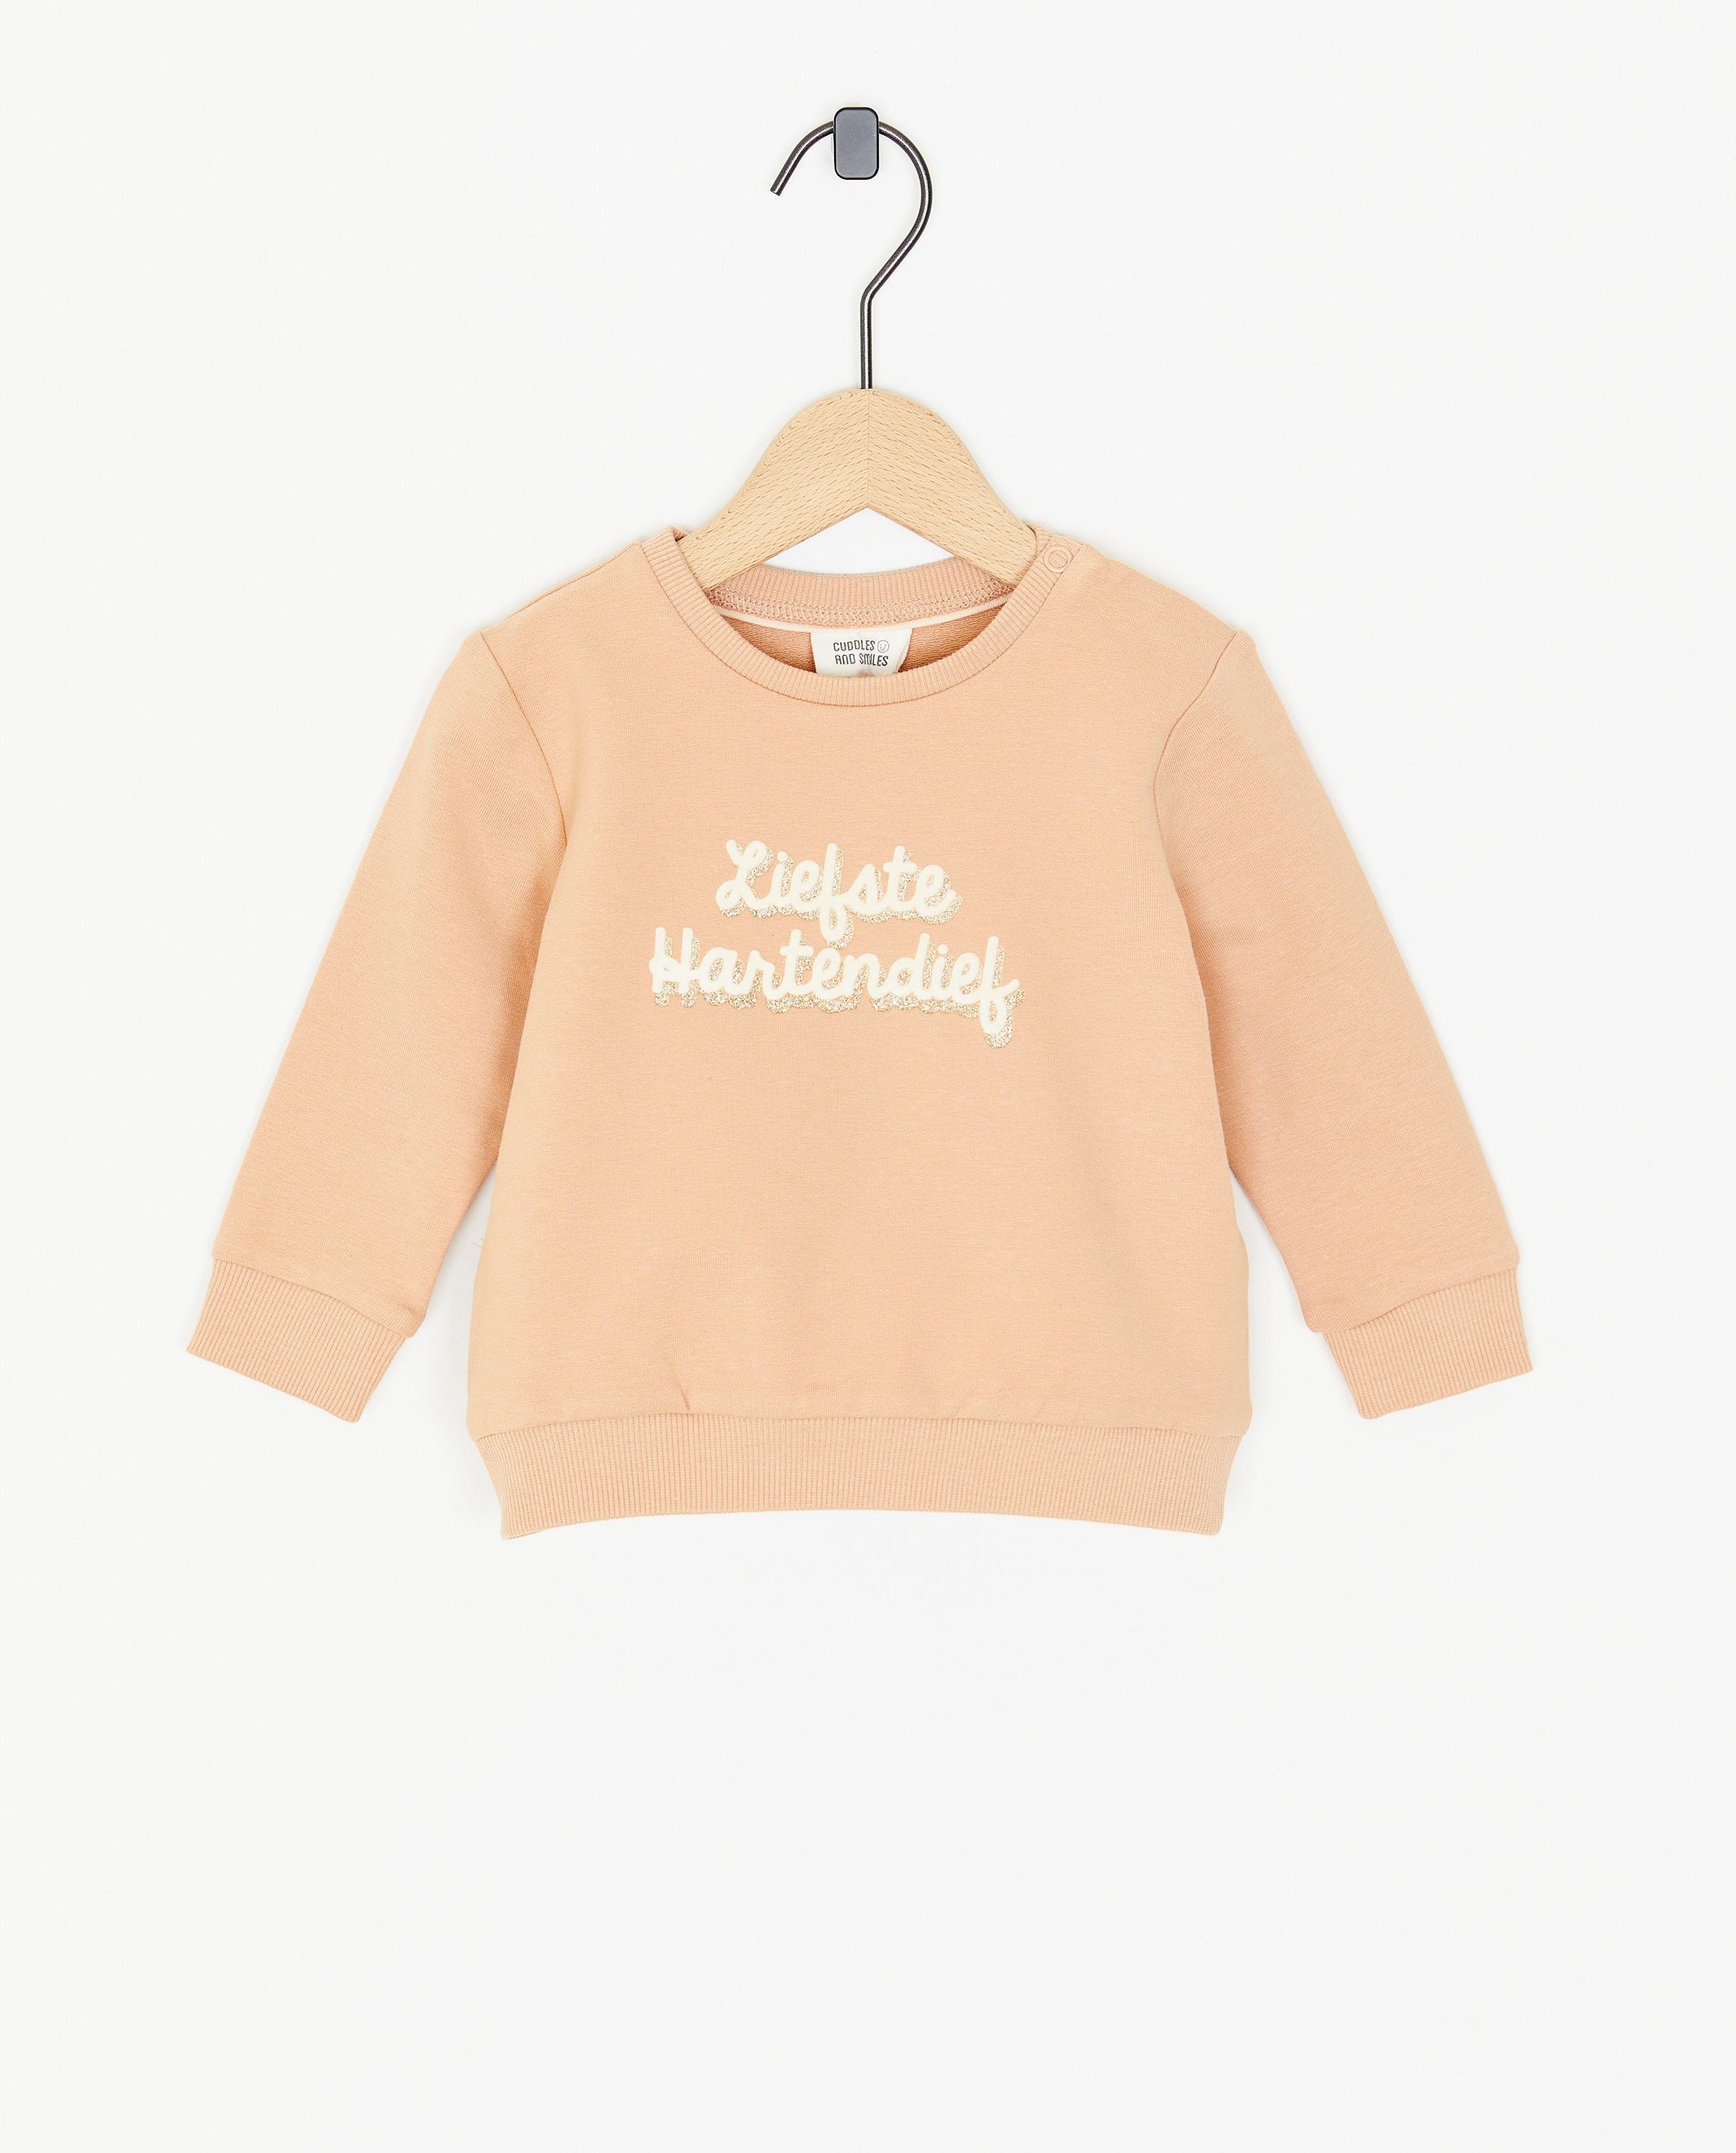 Sweater Liefste Hartendief - null - Cuddles and Smiles